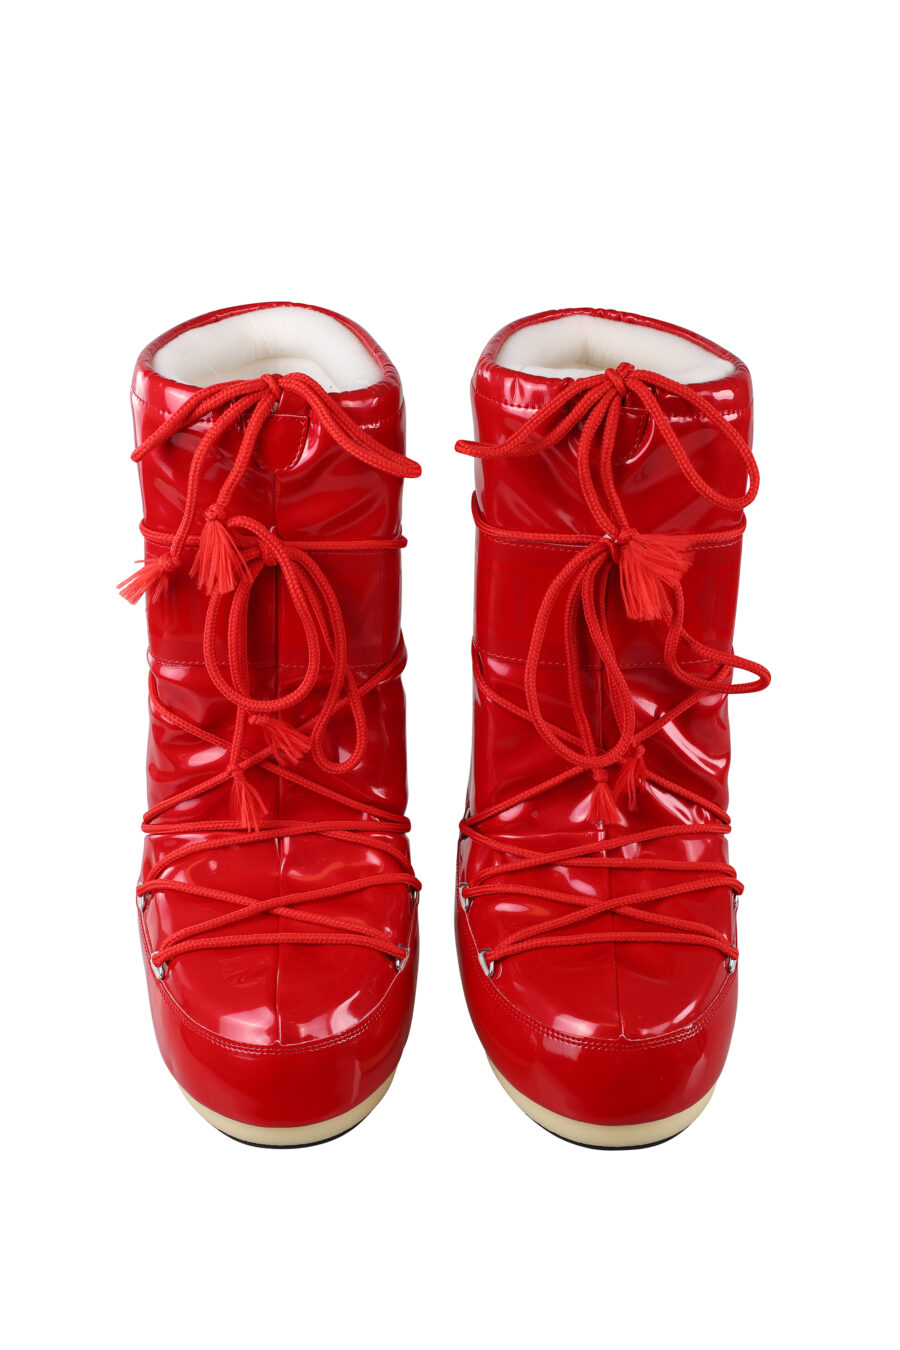 Botas de nieve rojas con logo monocromático - IMG 6704